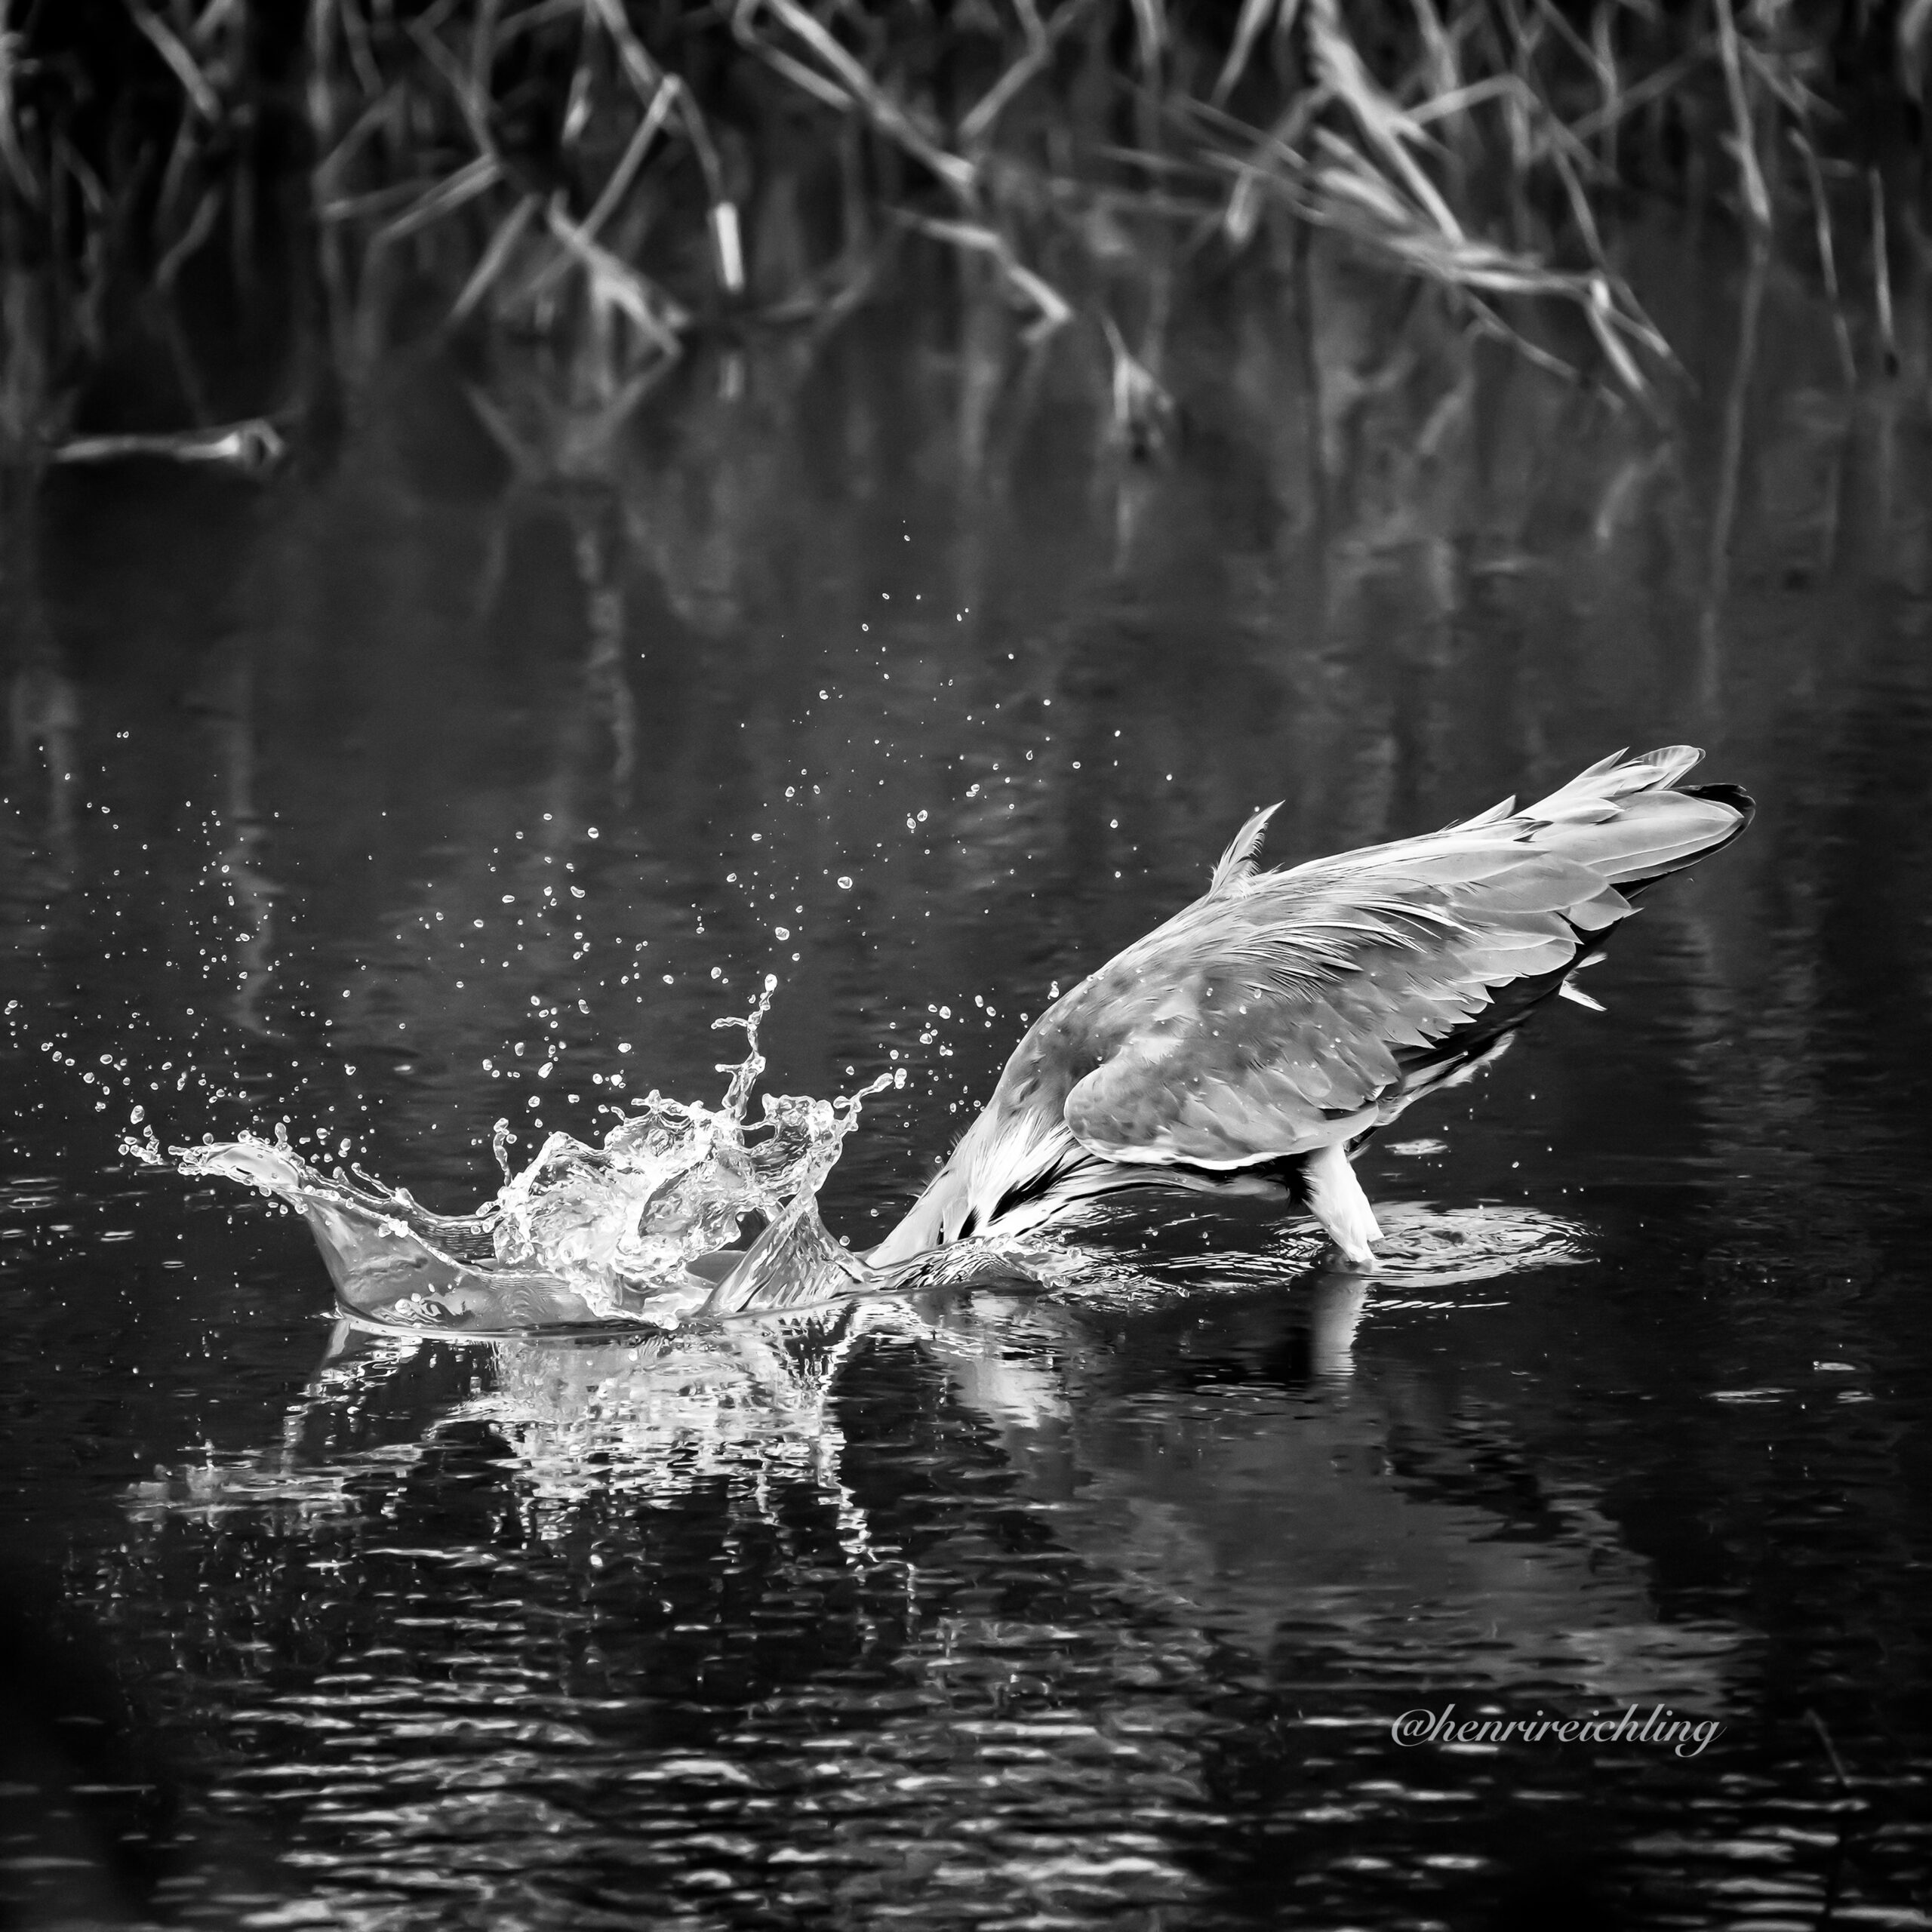 Bird head in water